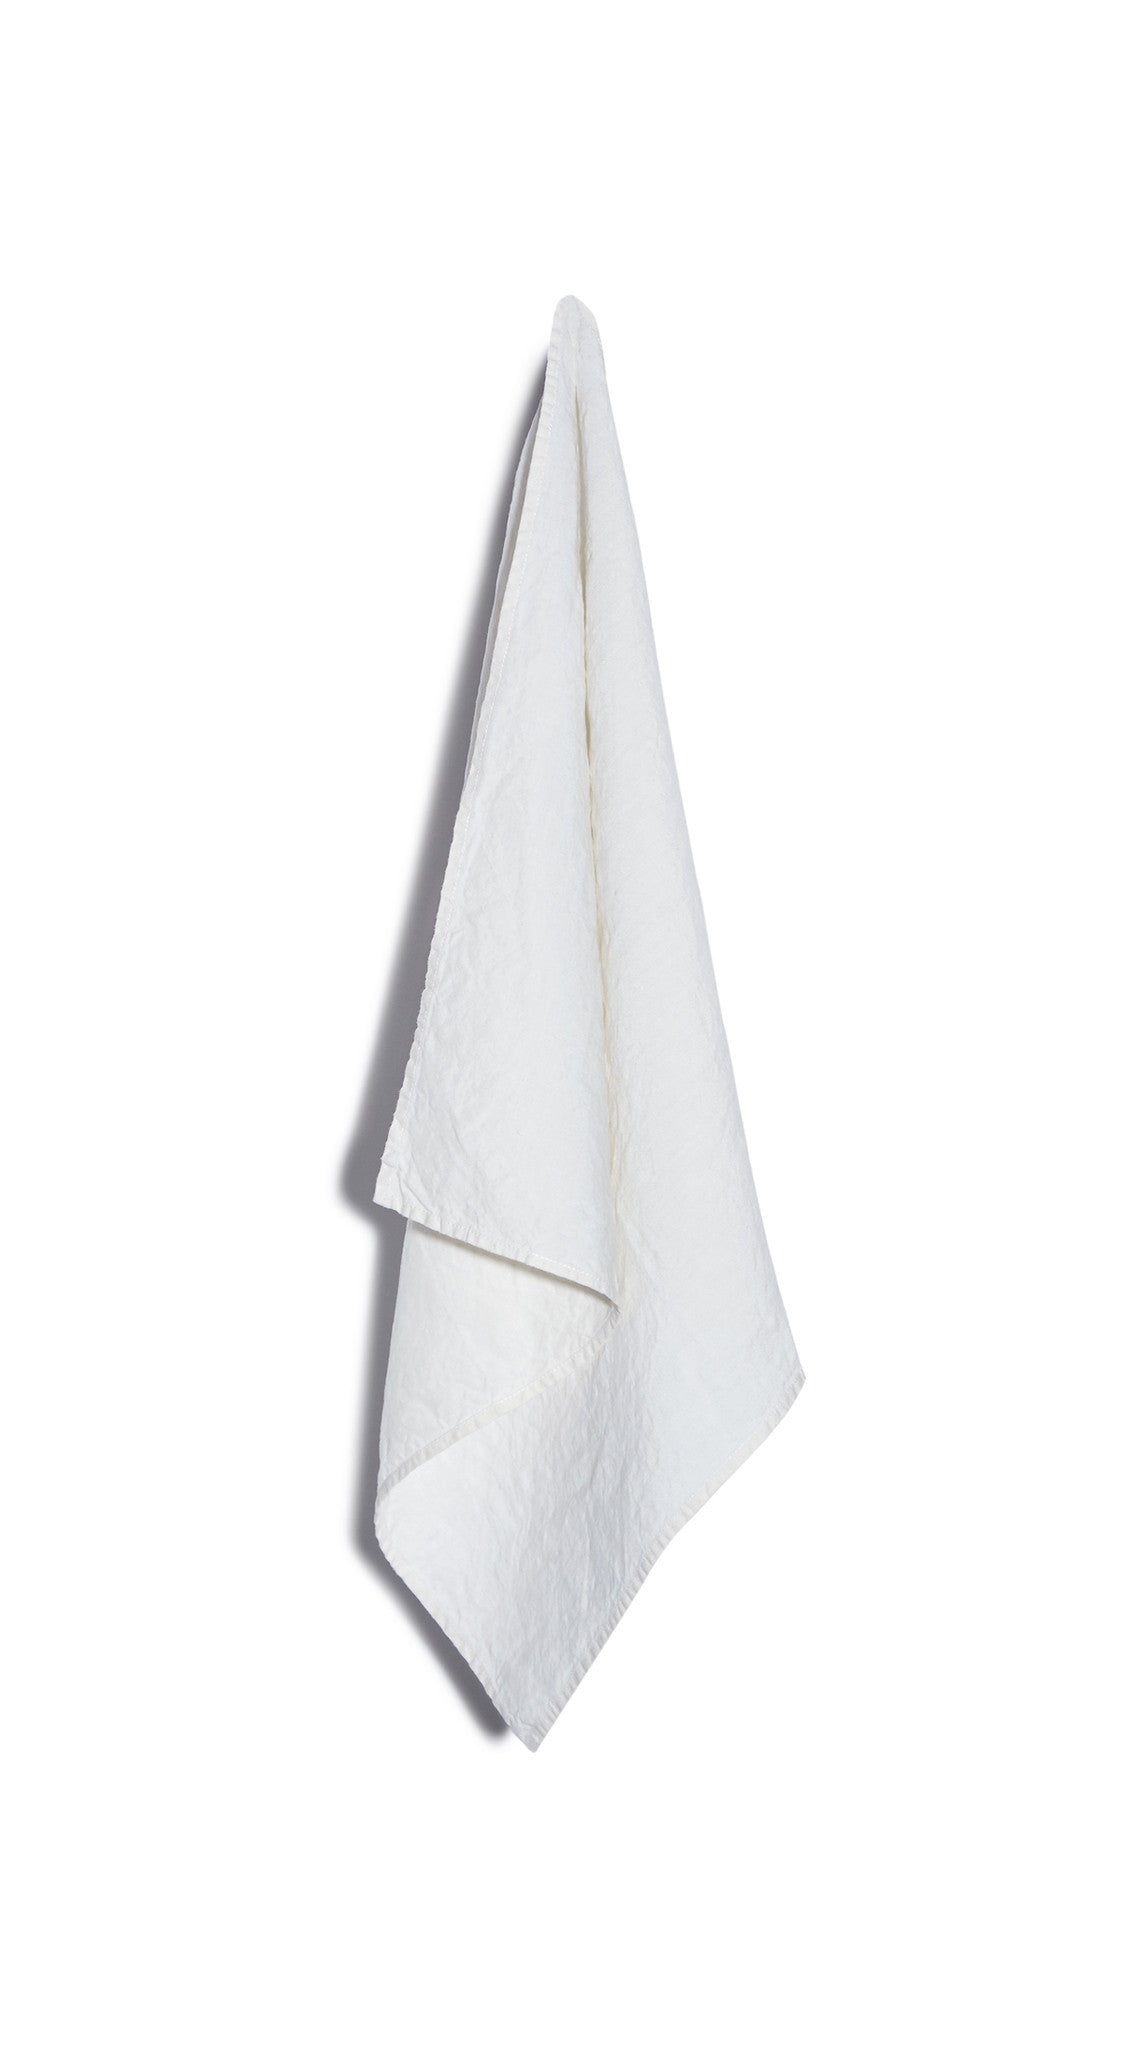 Plain Italian Linen Napkin in White, 50x50cm